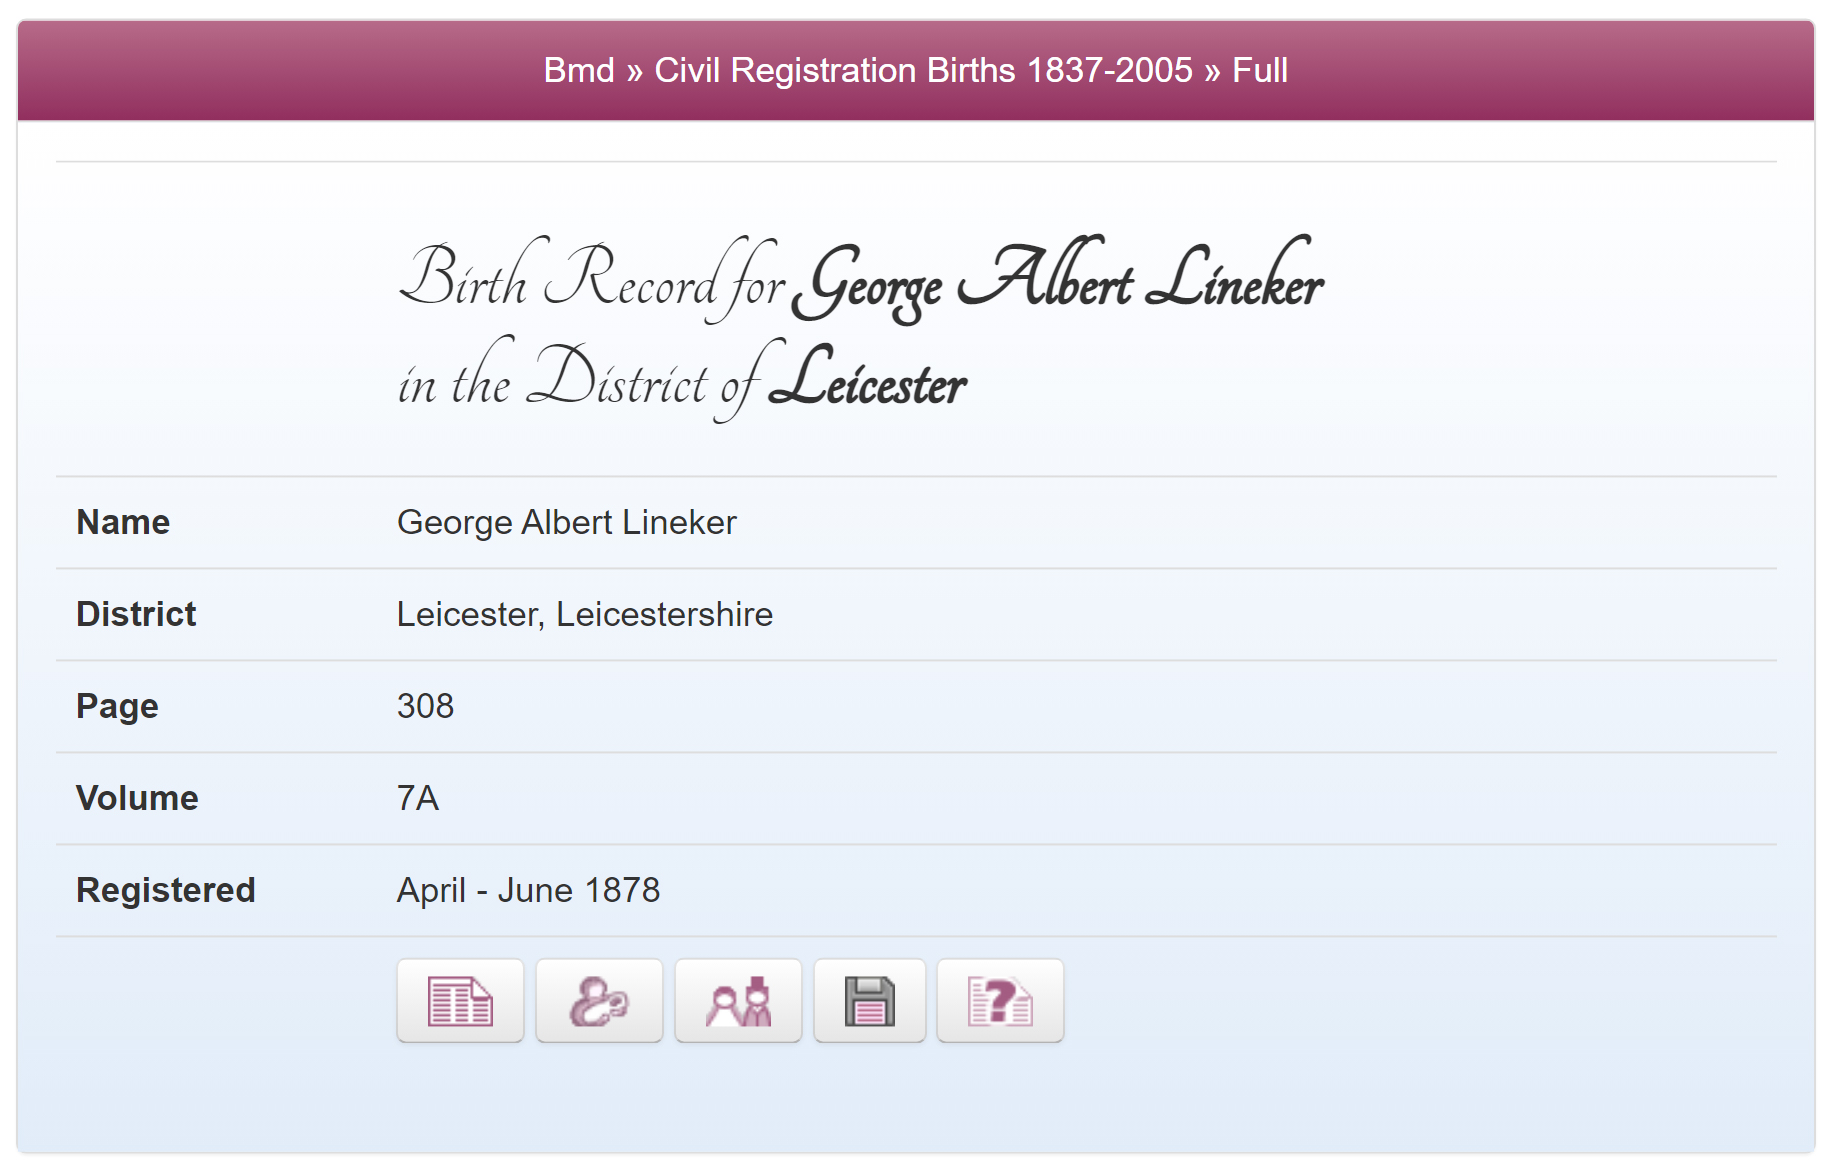 George Albert Lineker's Birth Record